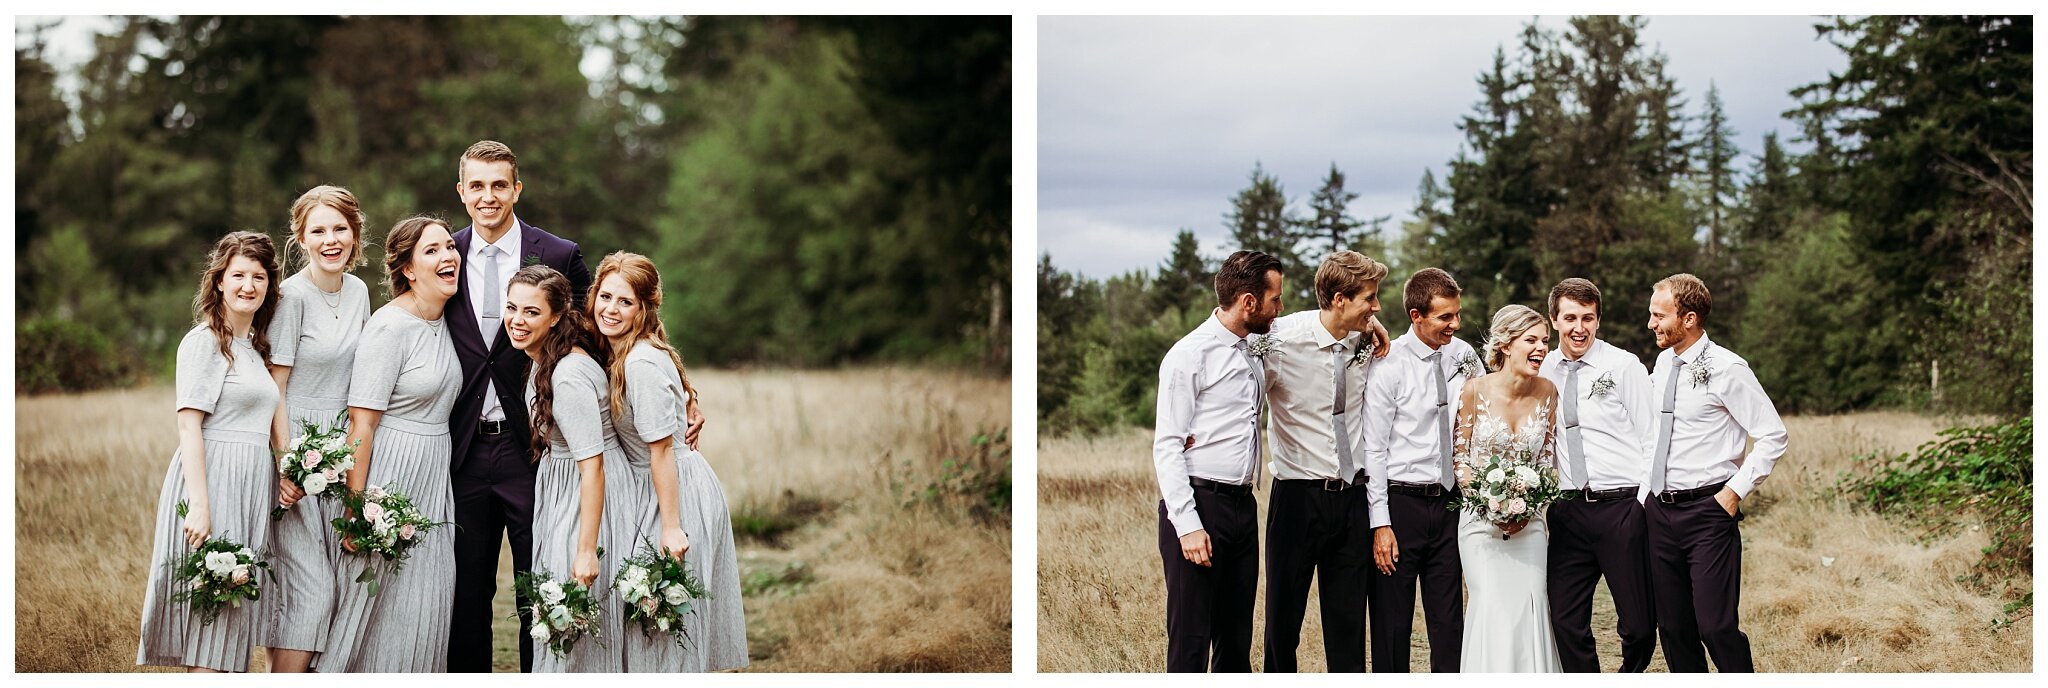 Redwood Forest Wedding Photographer Surrey BC  (18).jpg